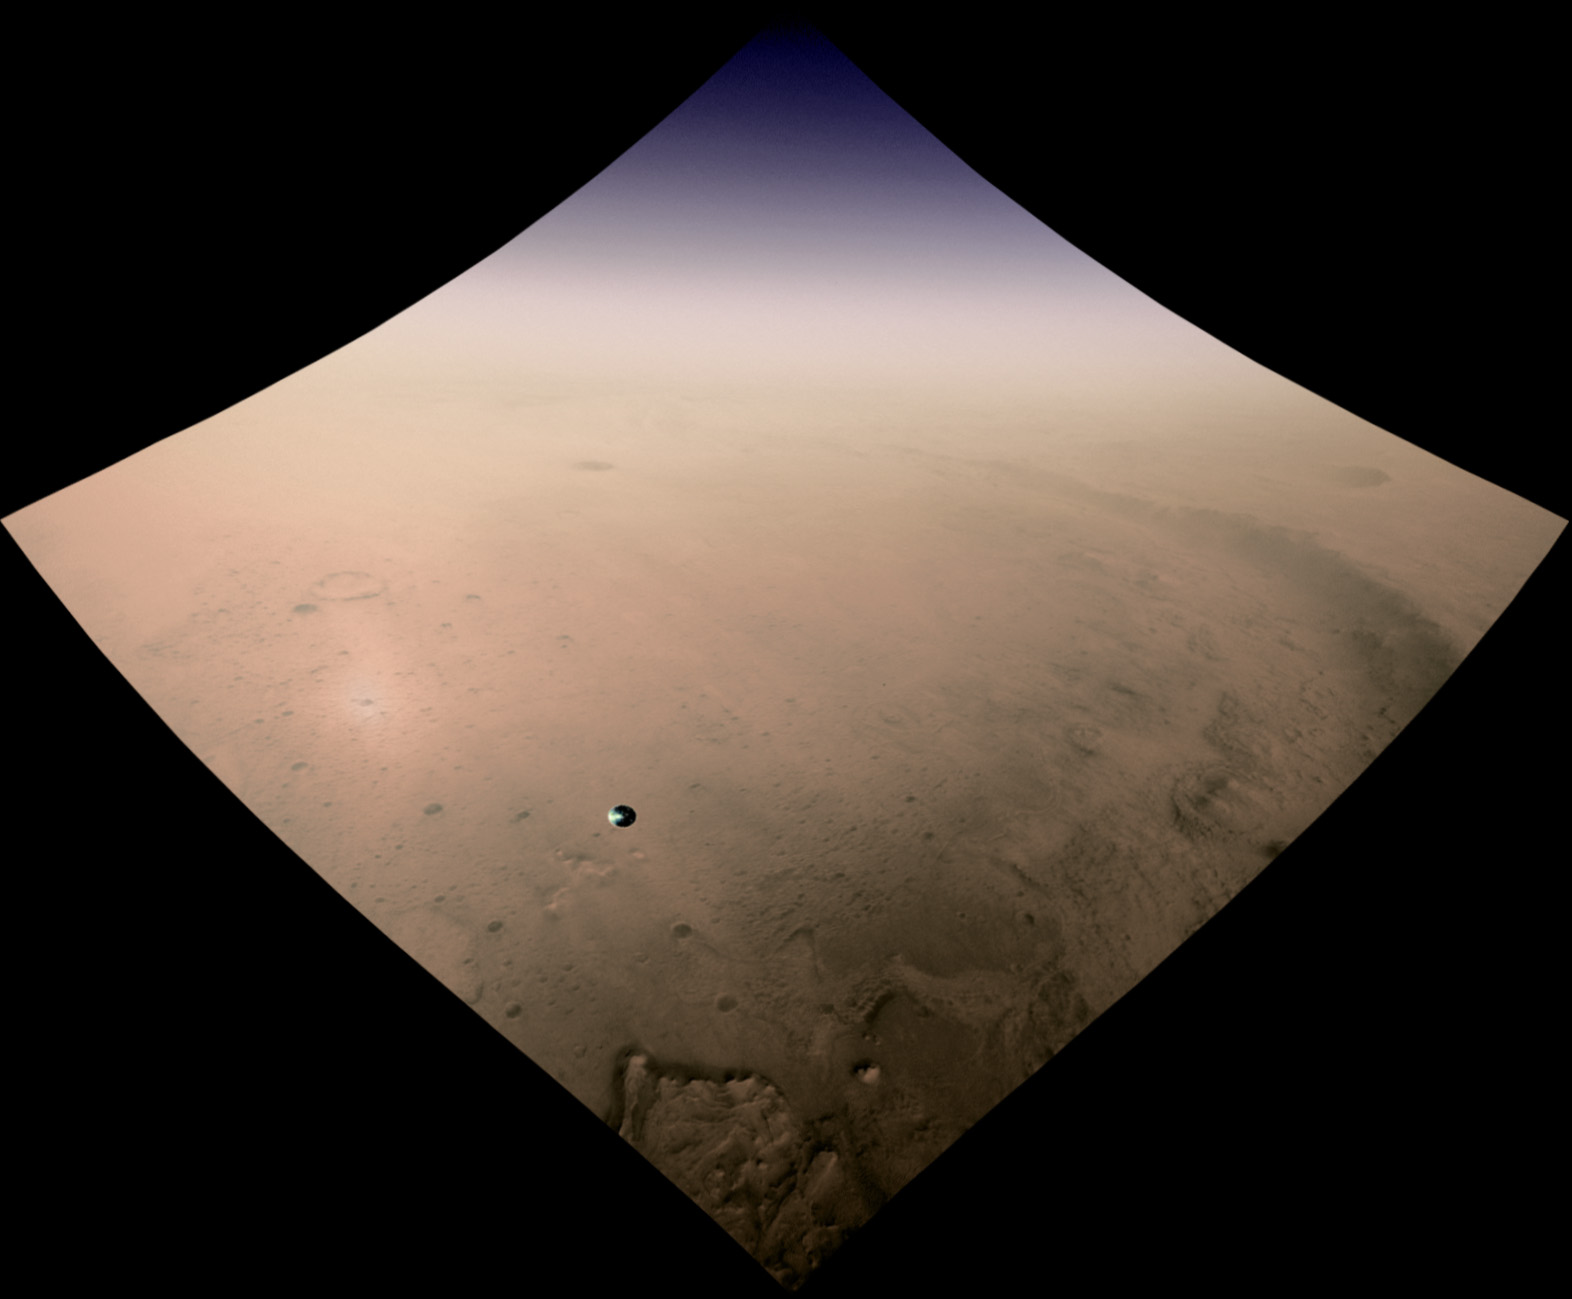 Lander Vision System Camera image processed to remove fisheye distortion.